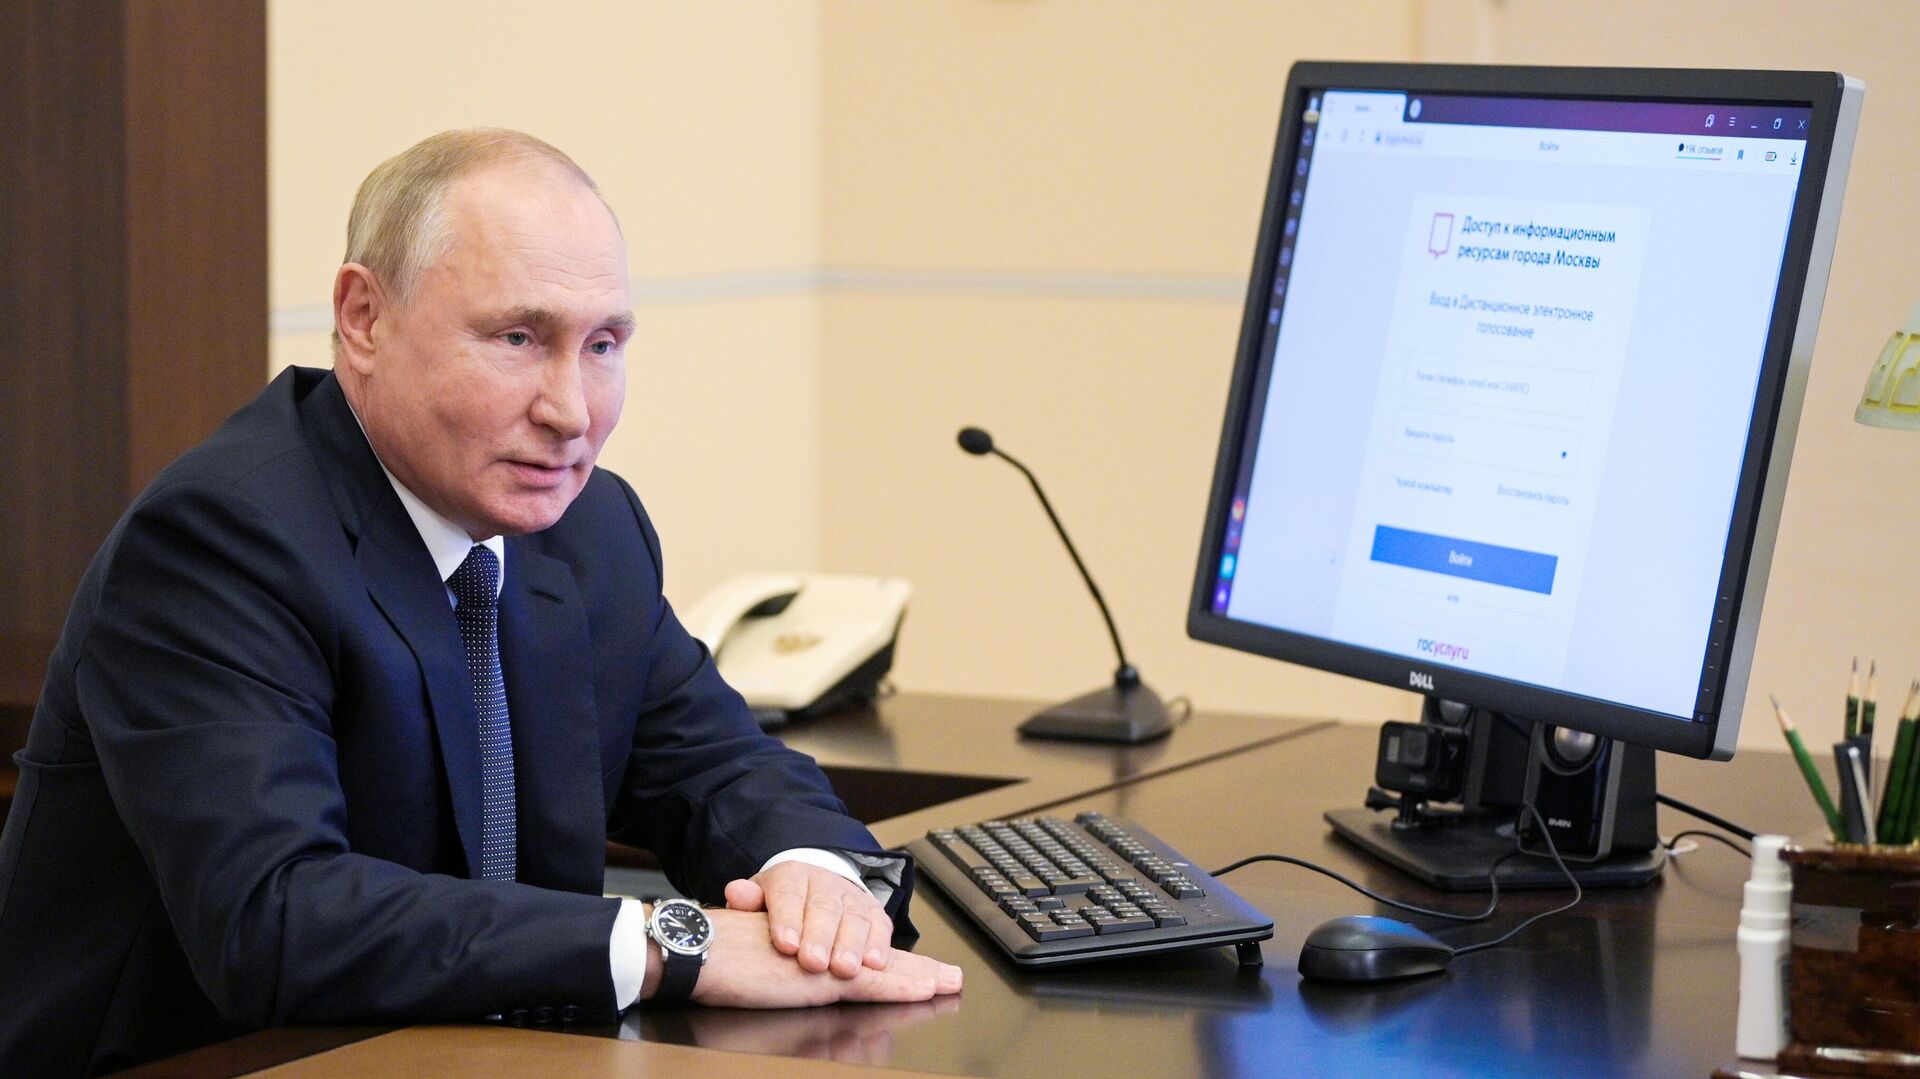 Putin vota de manera electrónica en las parlamentarias rusas - Sputnik Mundo, 1920, 17.09.2021